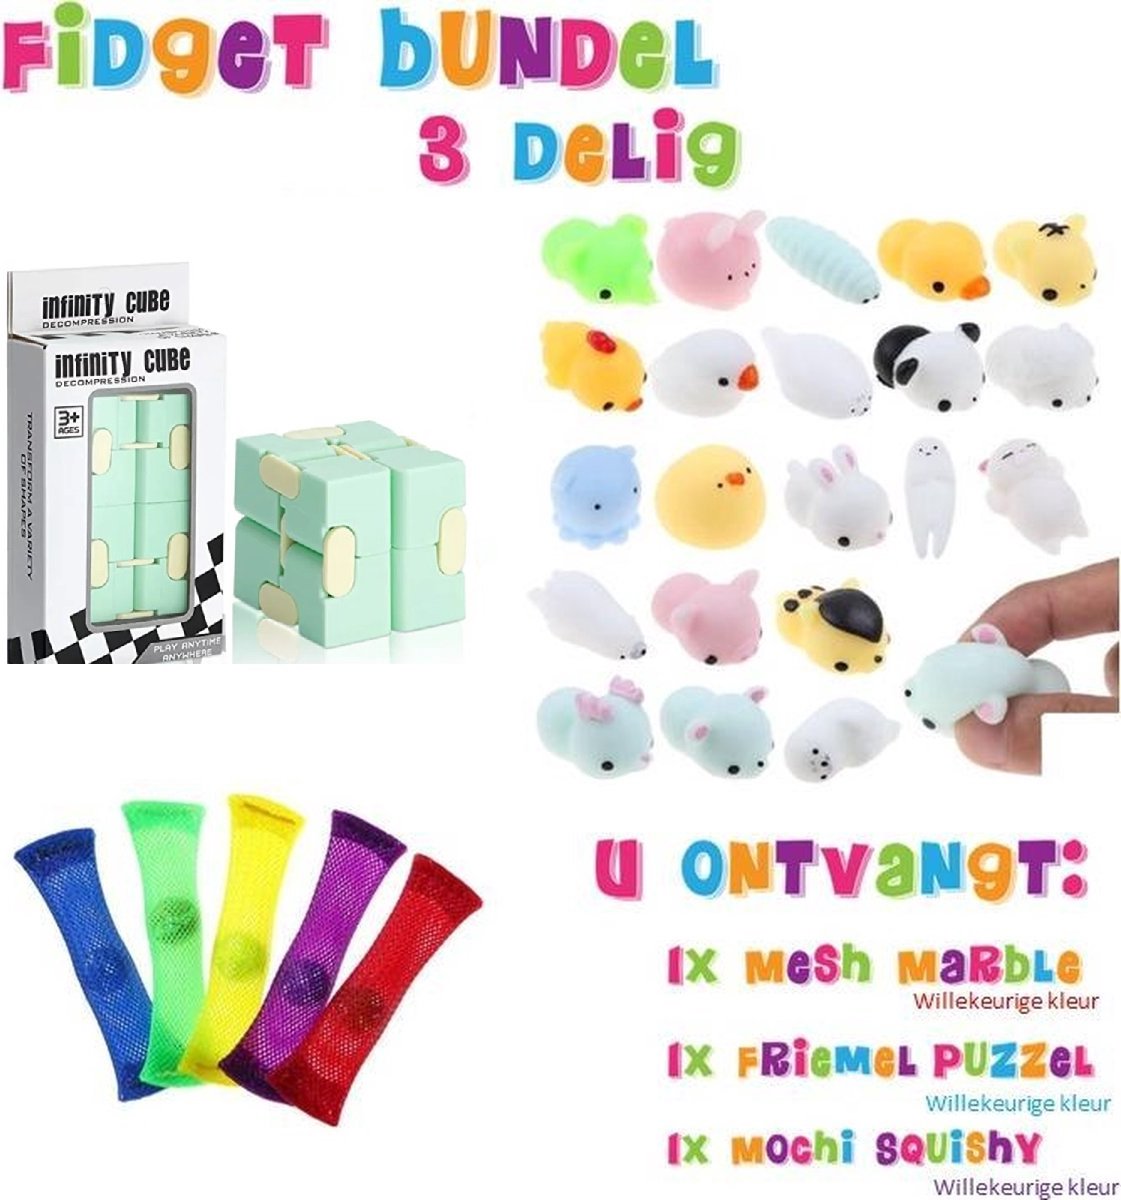 Fidget Toys pakket onder de 10 euro - Friemel puzzel - Mochi Squishy - Mesh Marble - Voordeelbundel - Fidget Toy